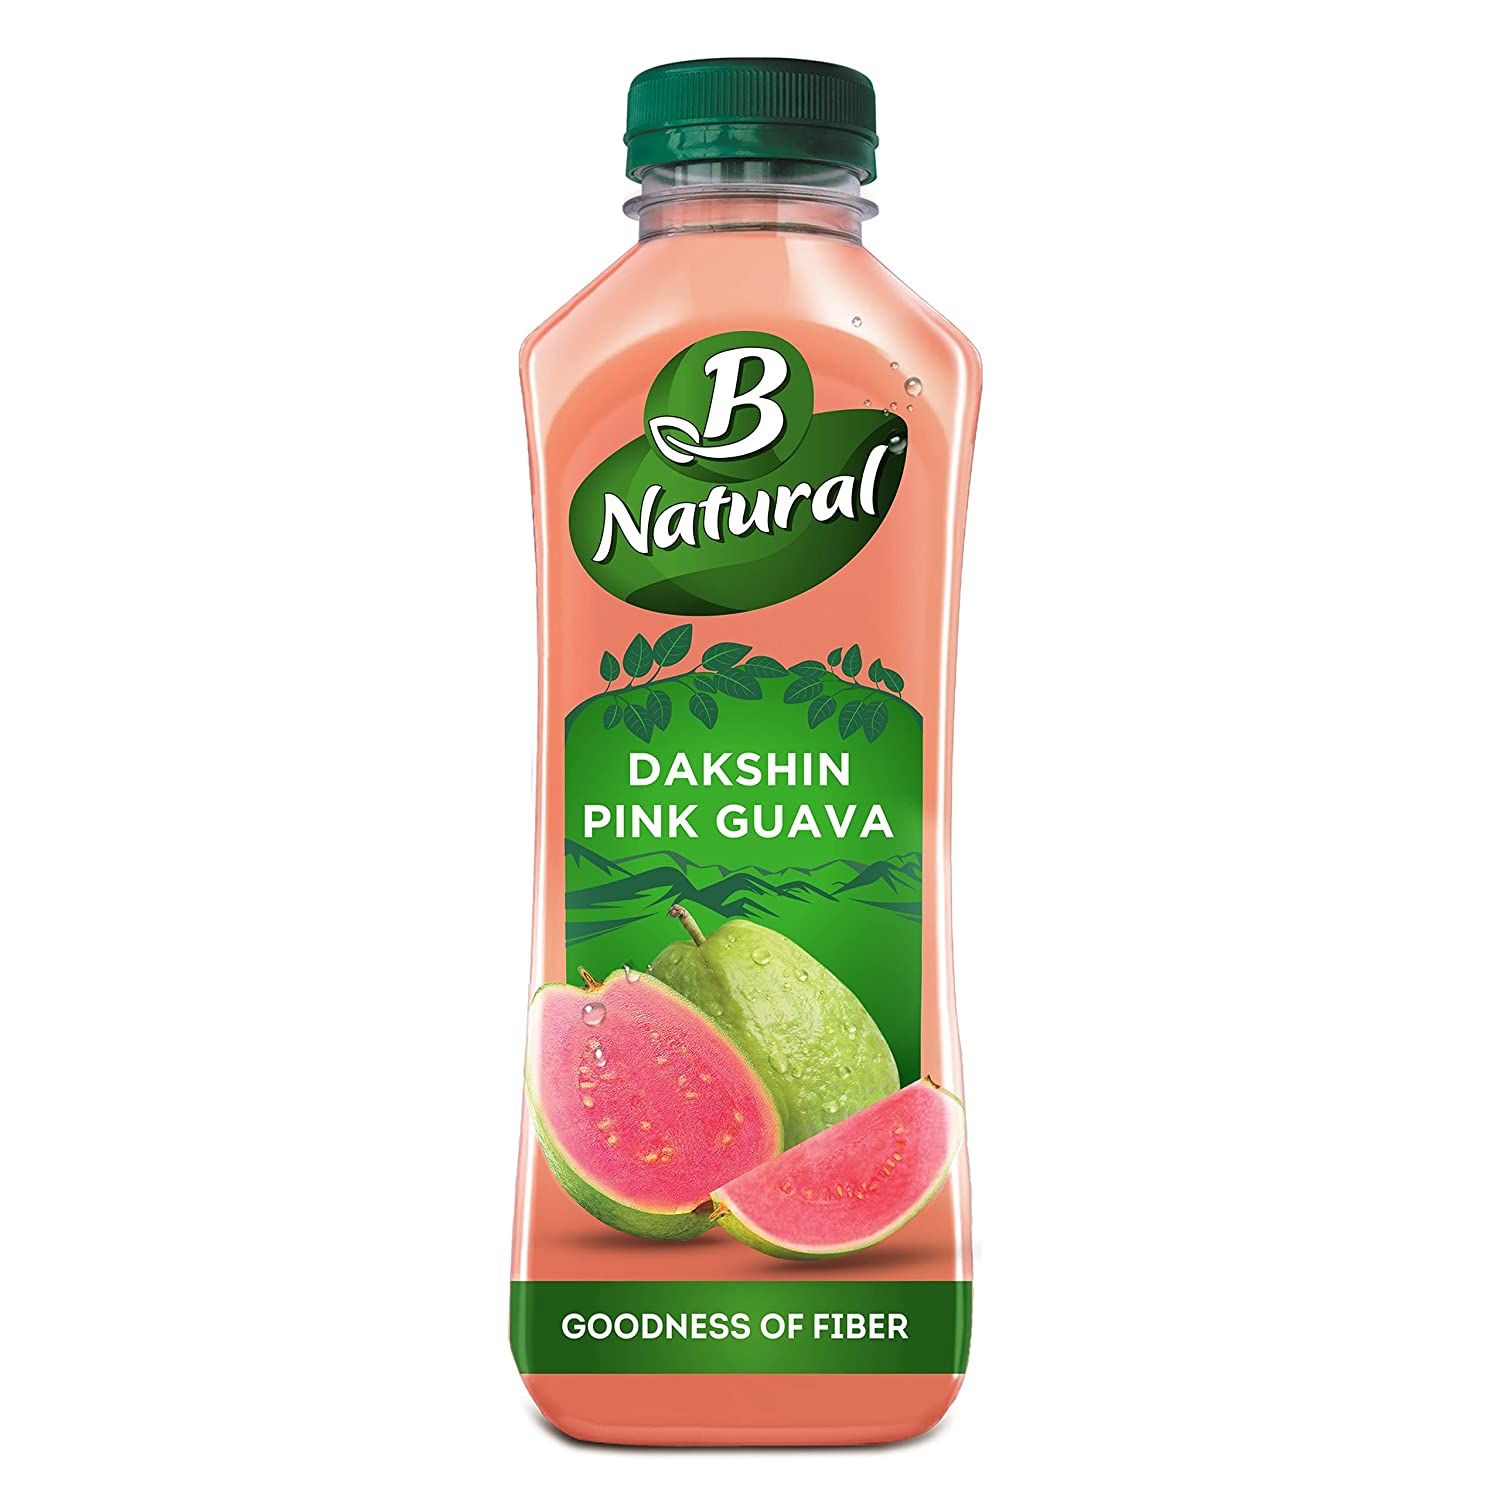 B Natural Dakshin Guava Image